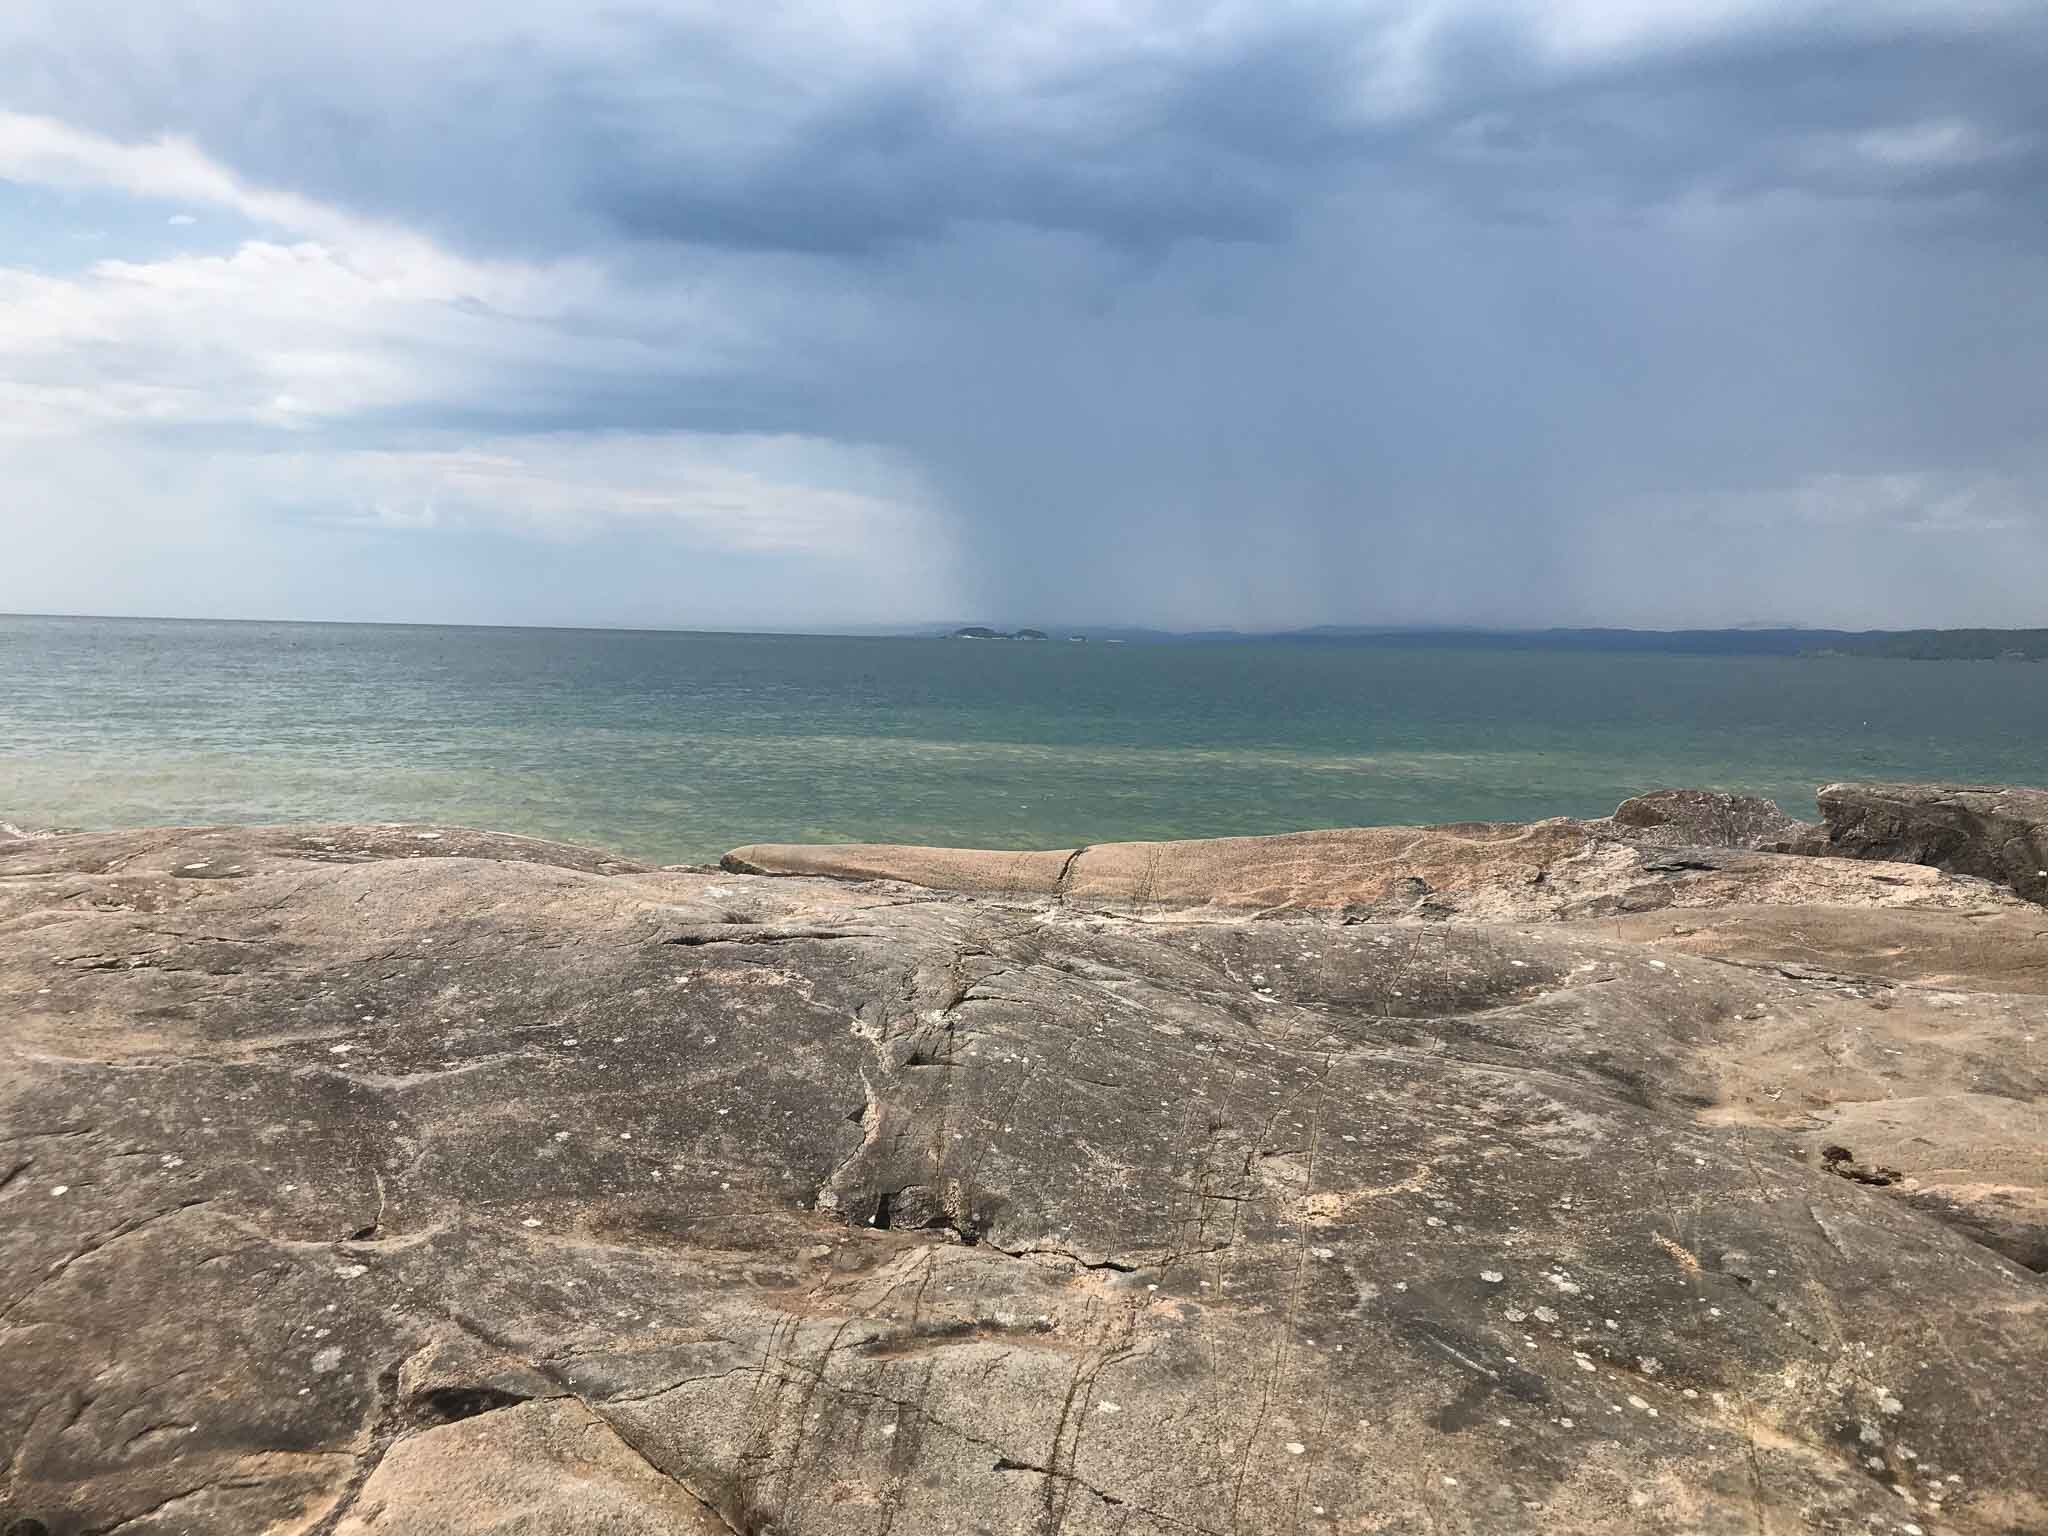  Storm on Lake Superior 